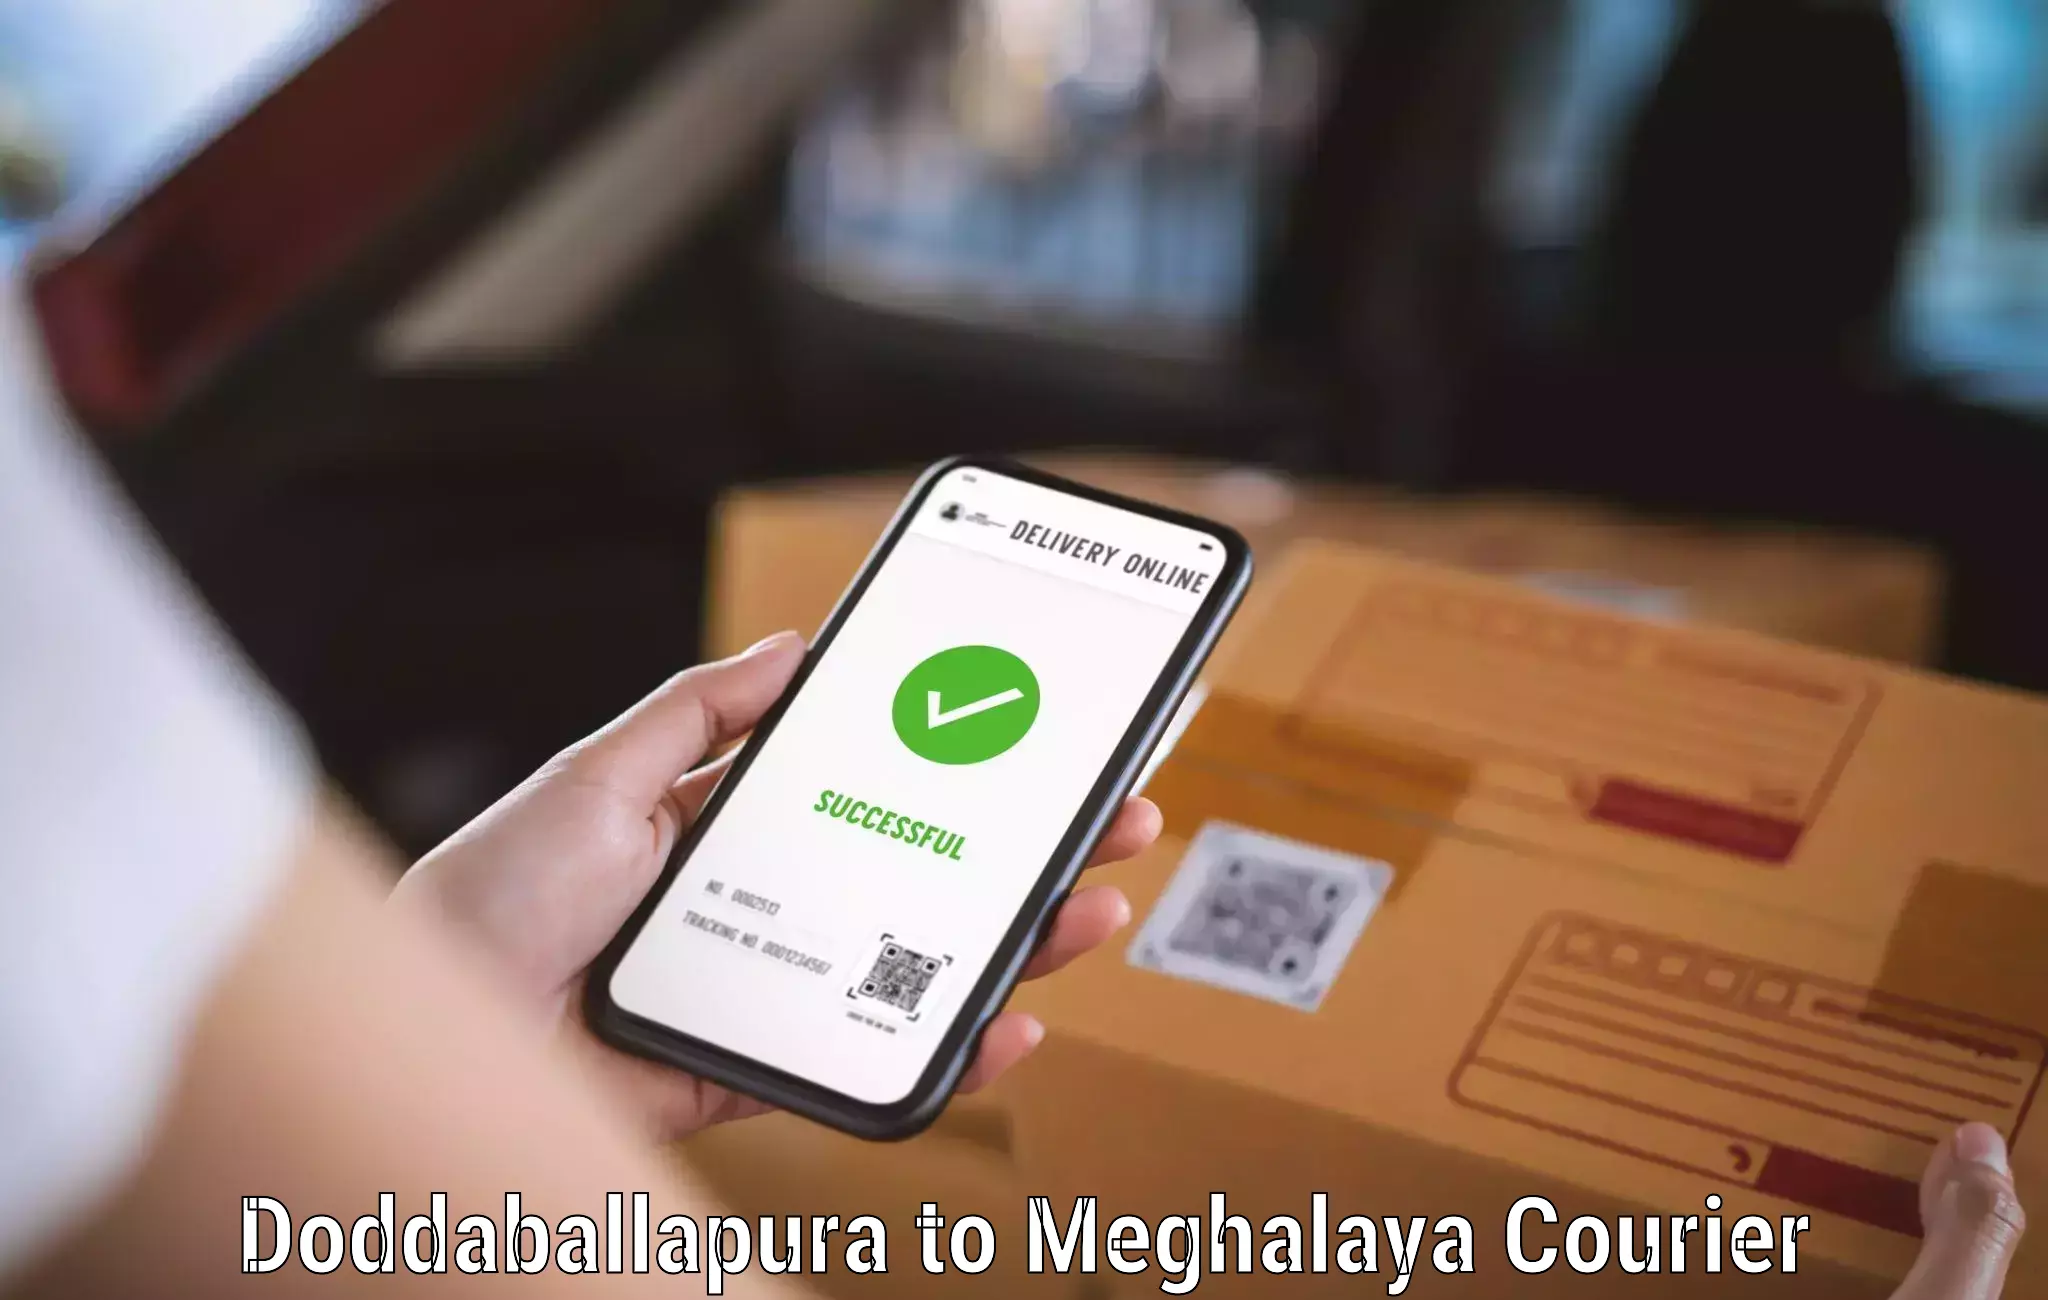 Fast delivery service Doddaballapura to Dkhiah West